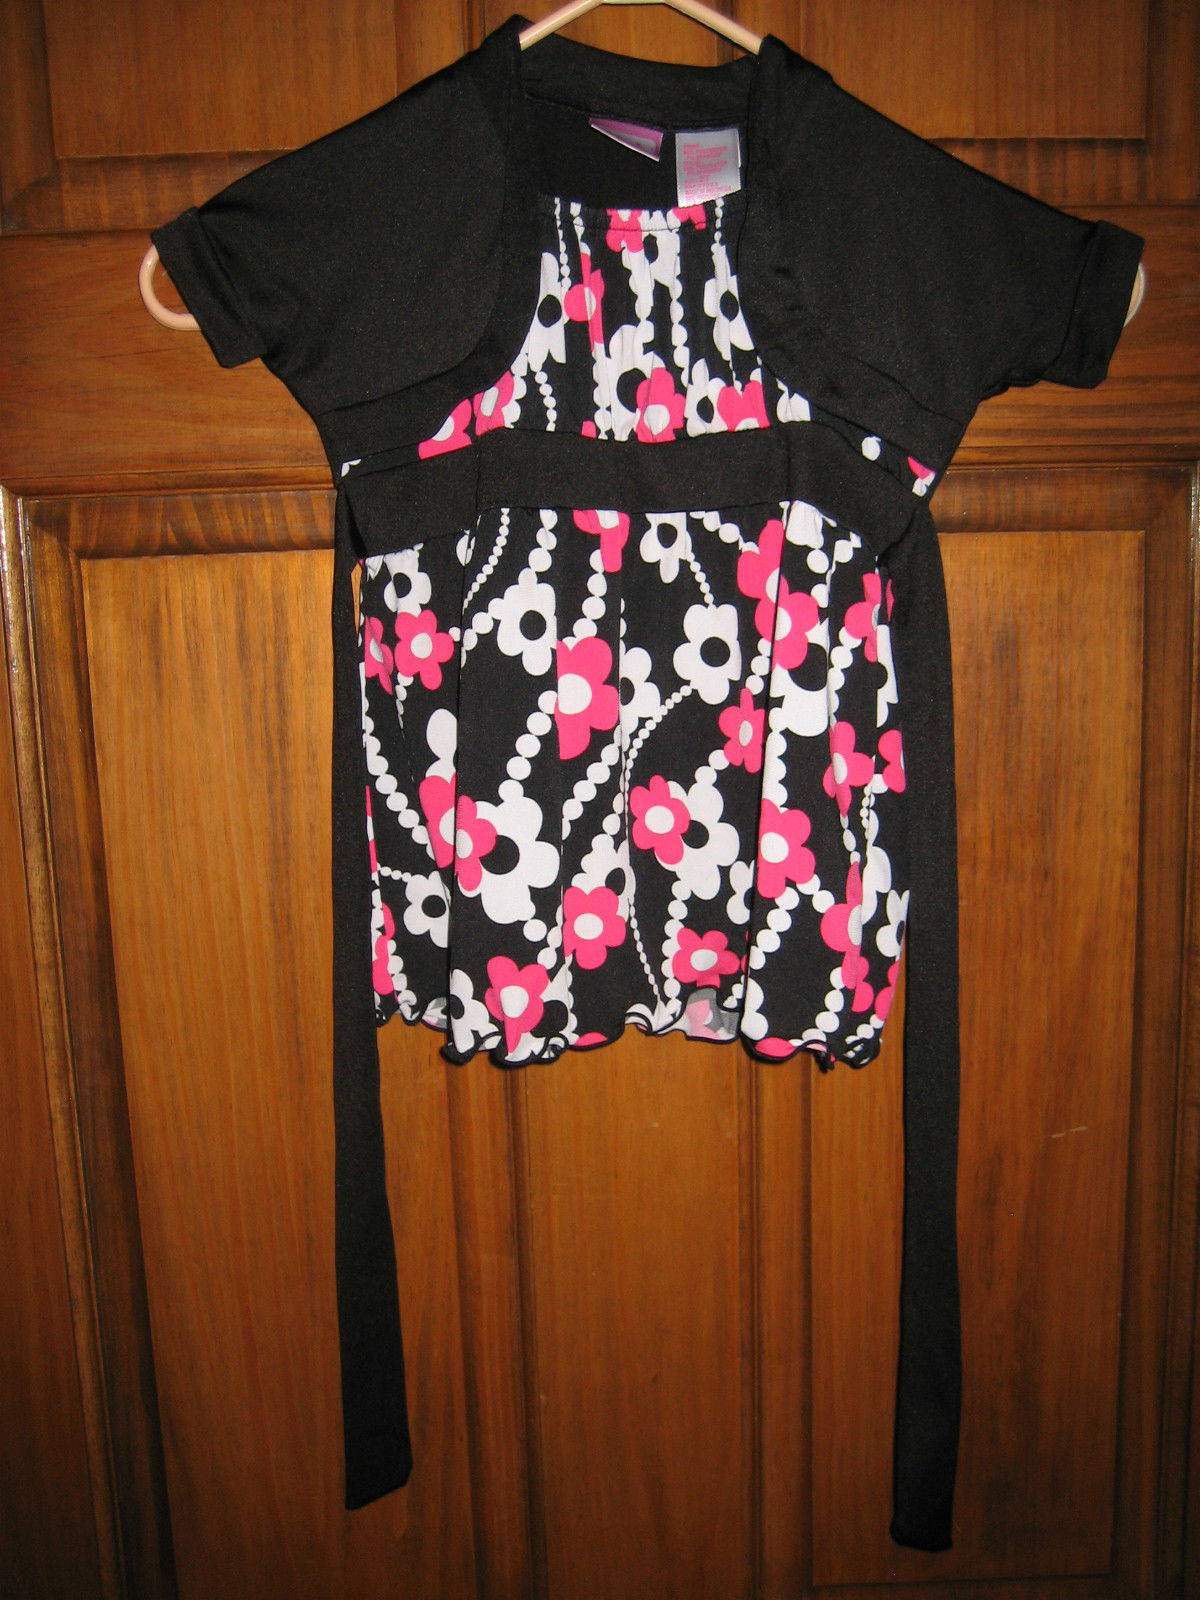 Toddler Girl's Kidgets Floral Print Dress - Size 2T - $10.21